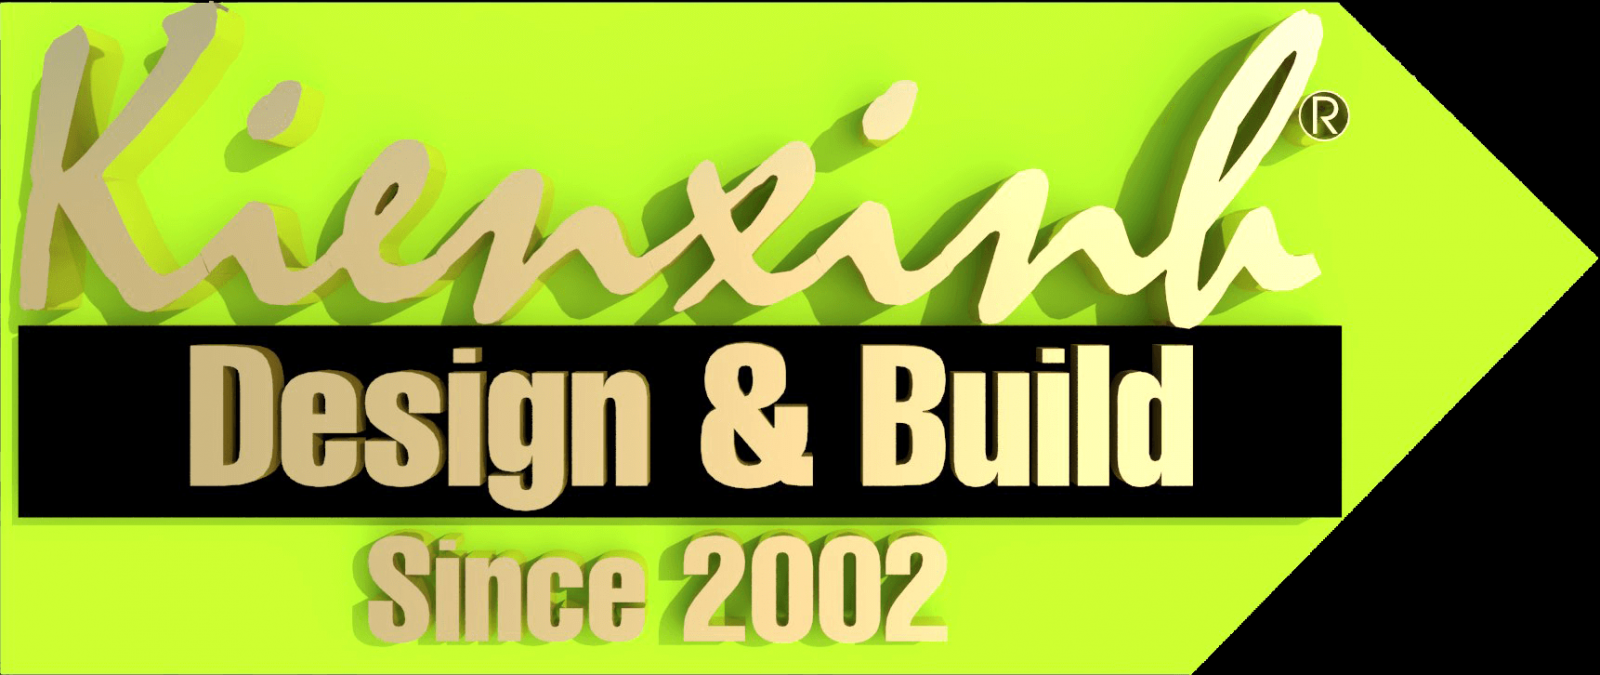 Kienxinh Design & Build since 2002